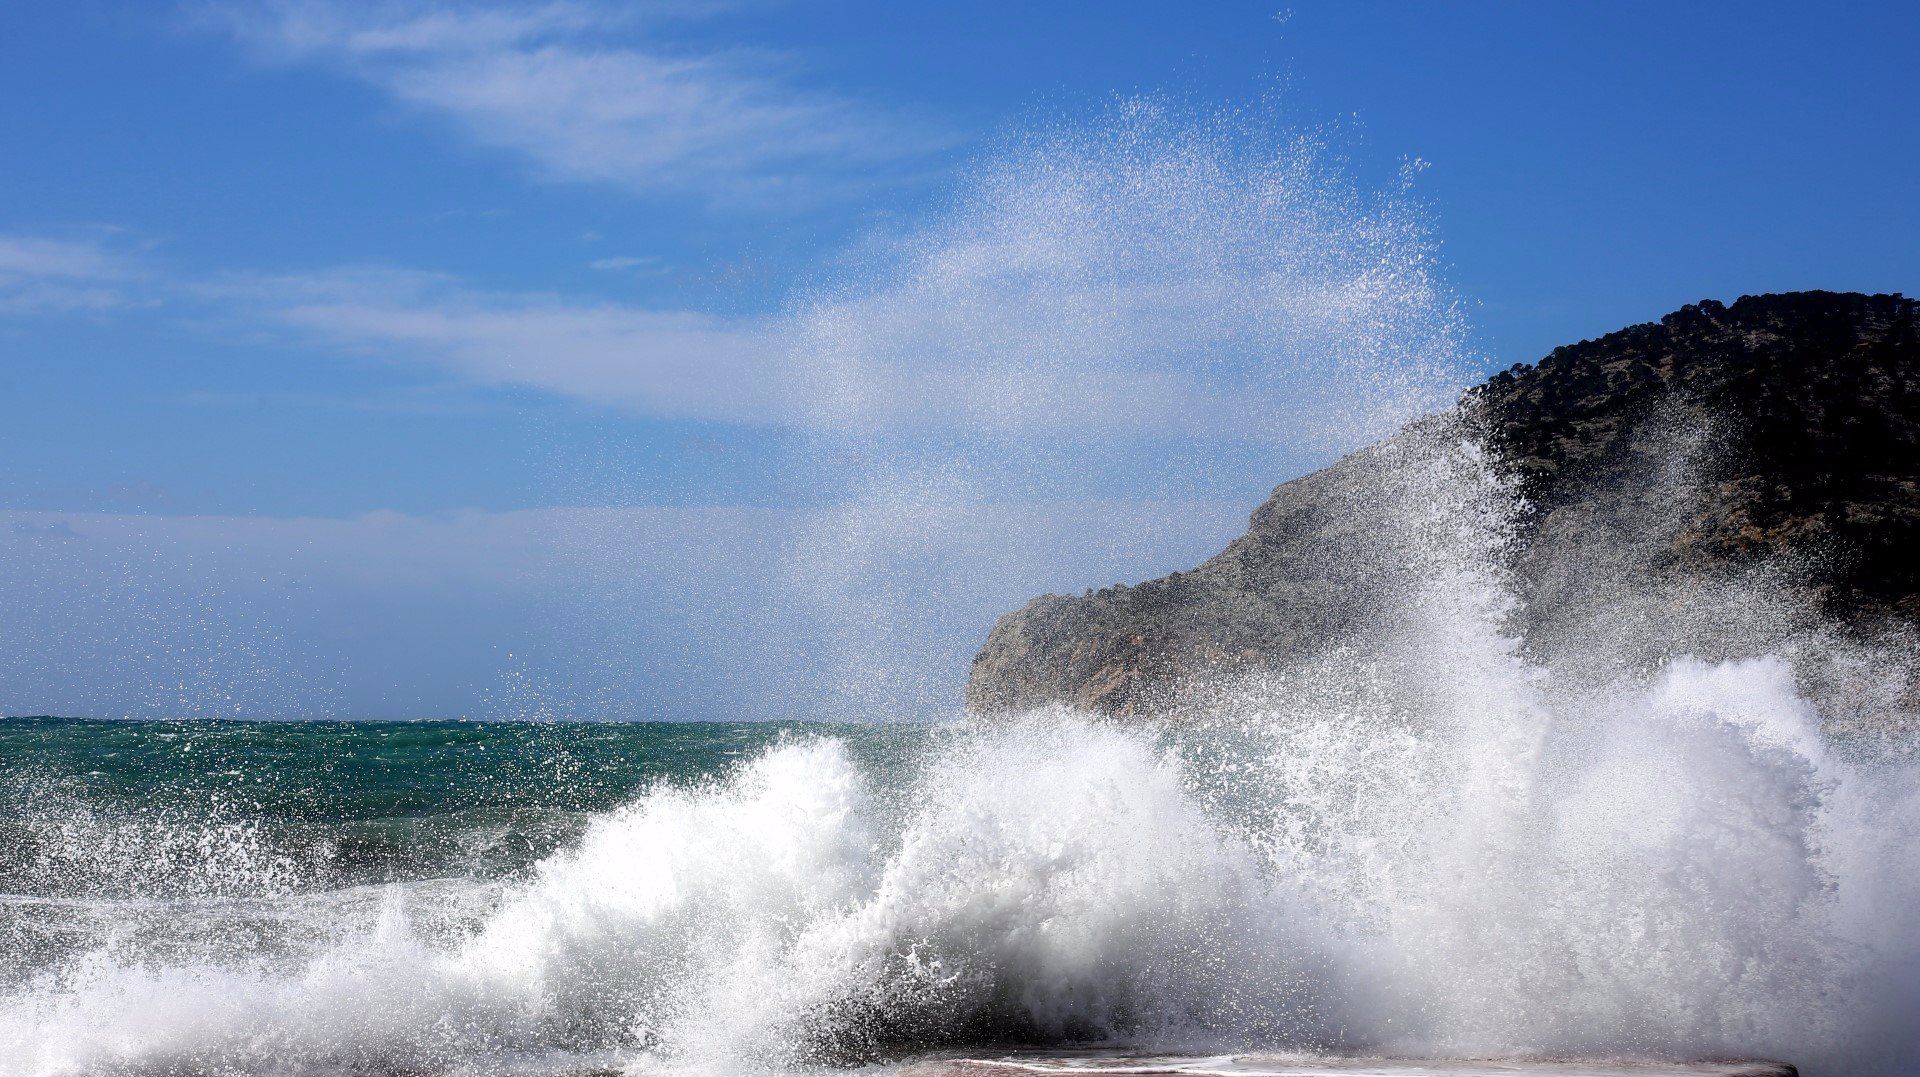 Wild waves crash against the beach in Port d'Andratx